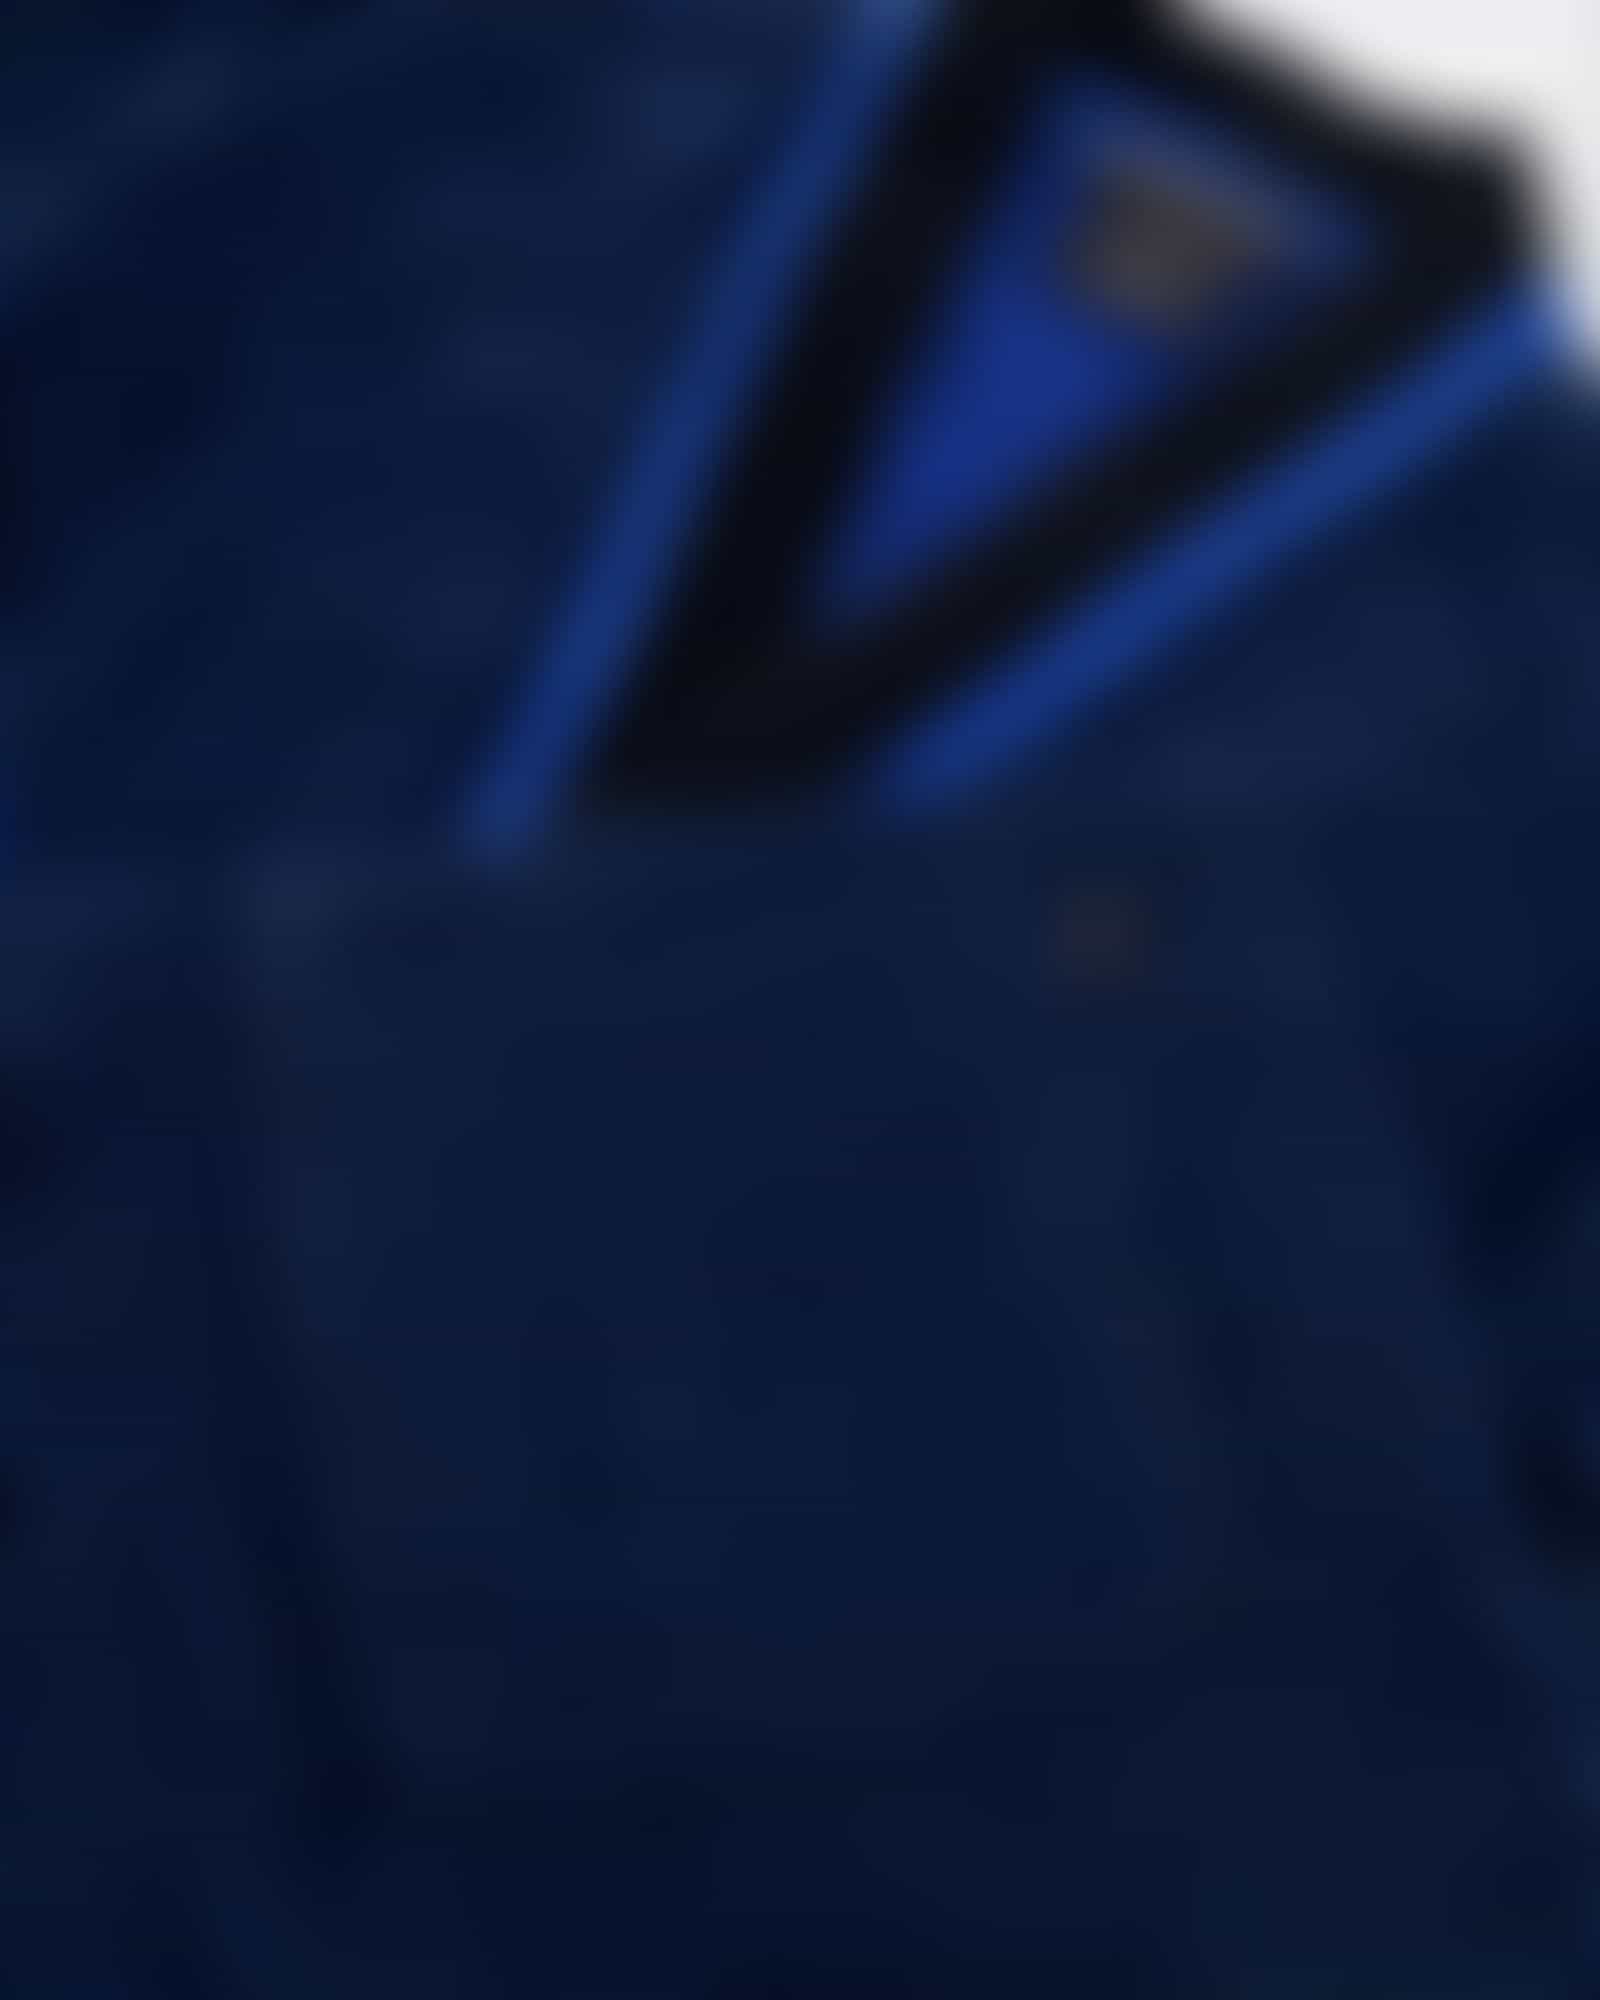 Cawö - Herren Bademantel Kimono 4839 - Farbe: blau/schwarz - 19 - XL